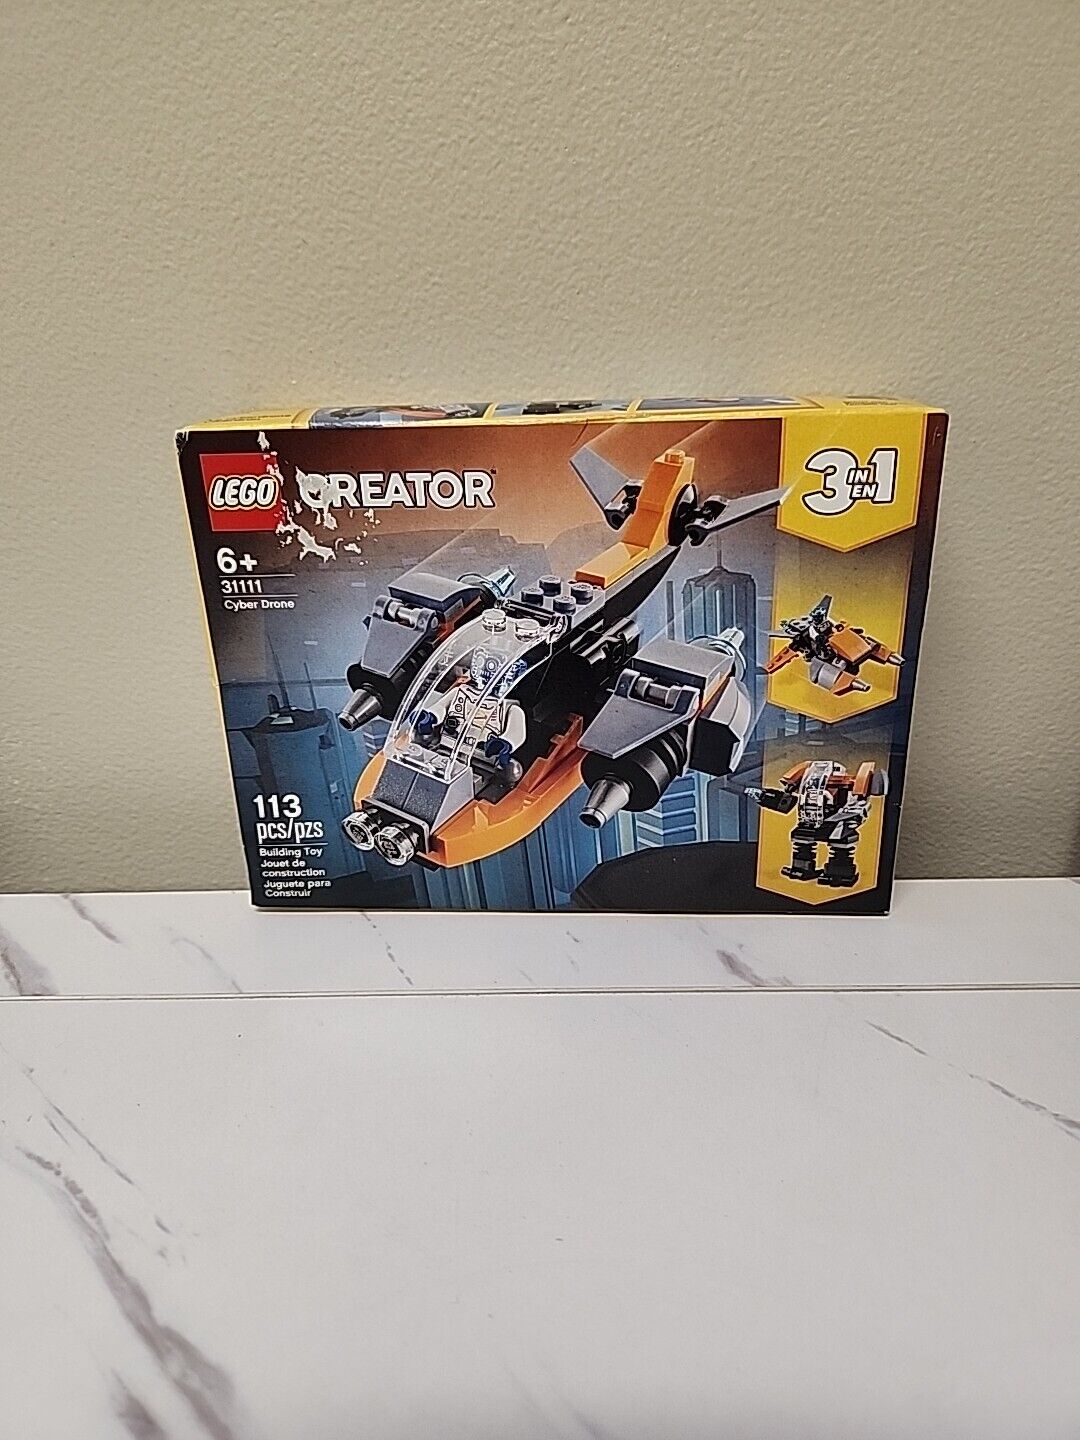 LEGO :Creator 3in1 (31111) Cyber Drone, 113 Pcs. (D4)